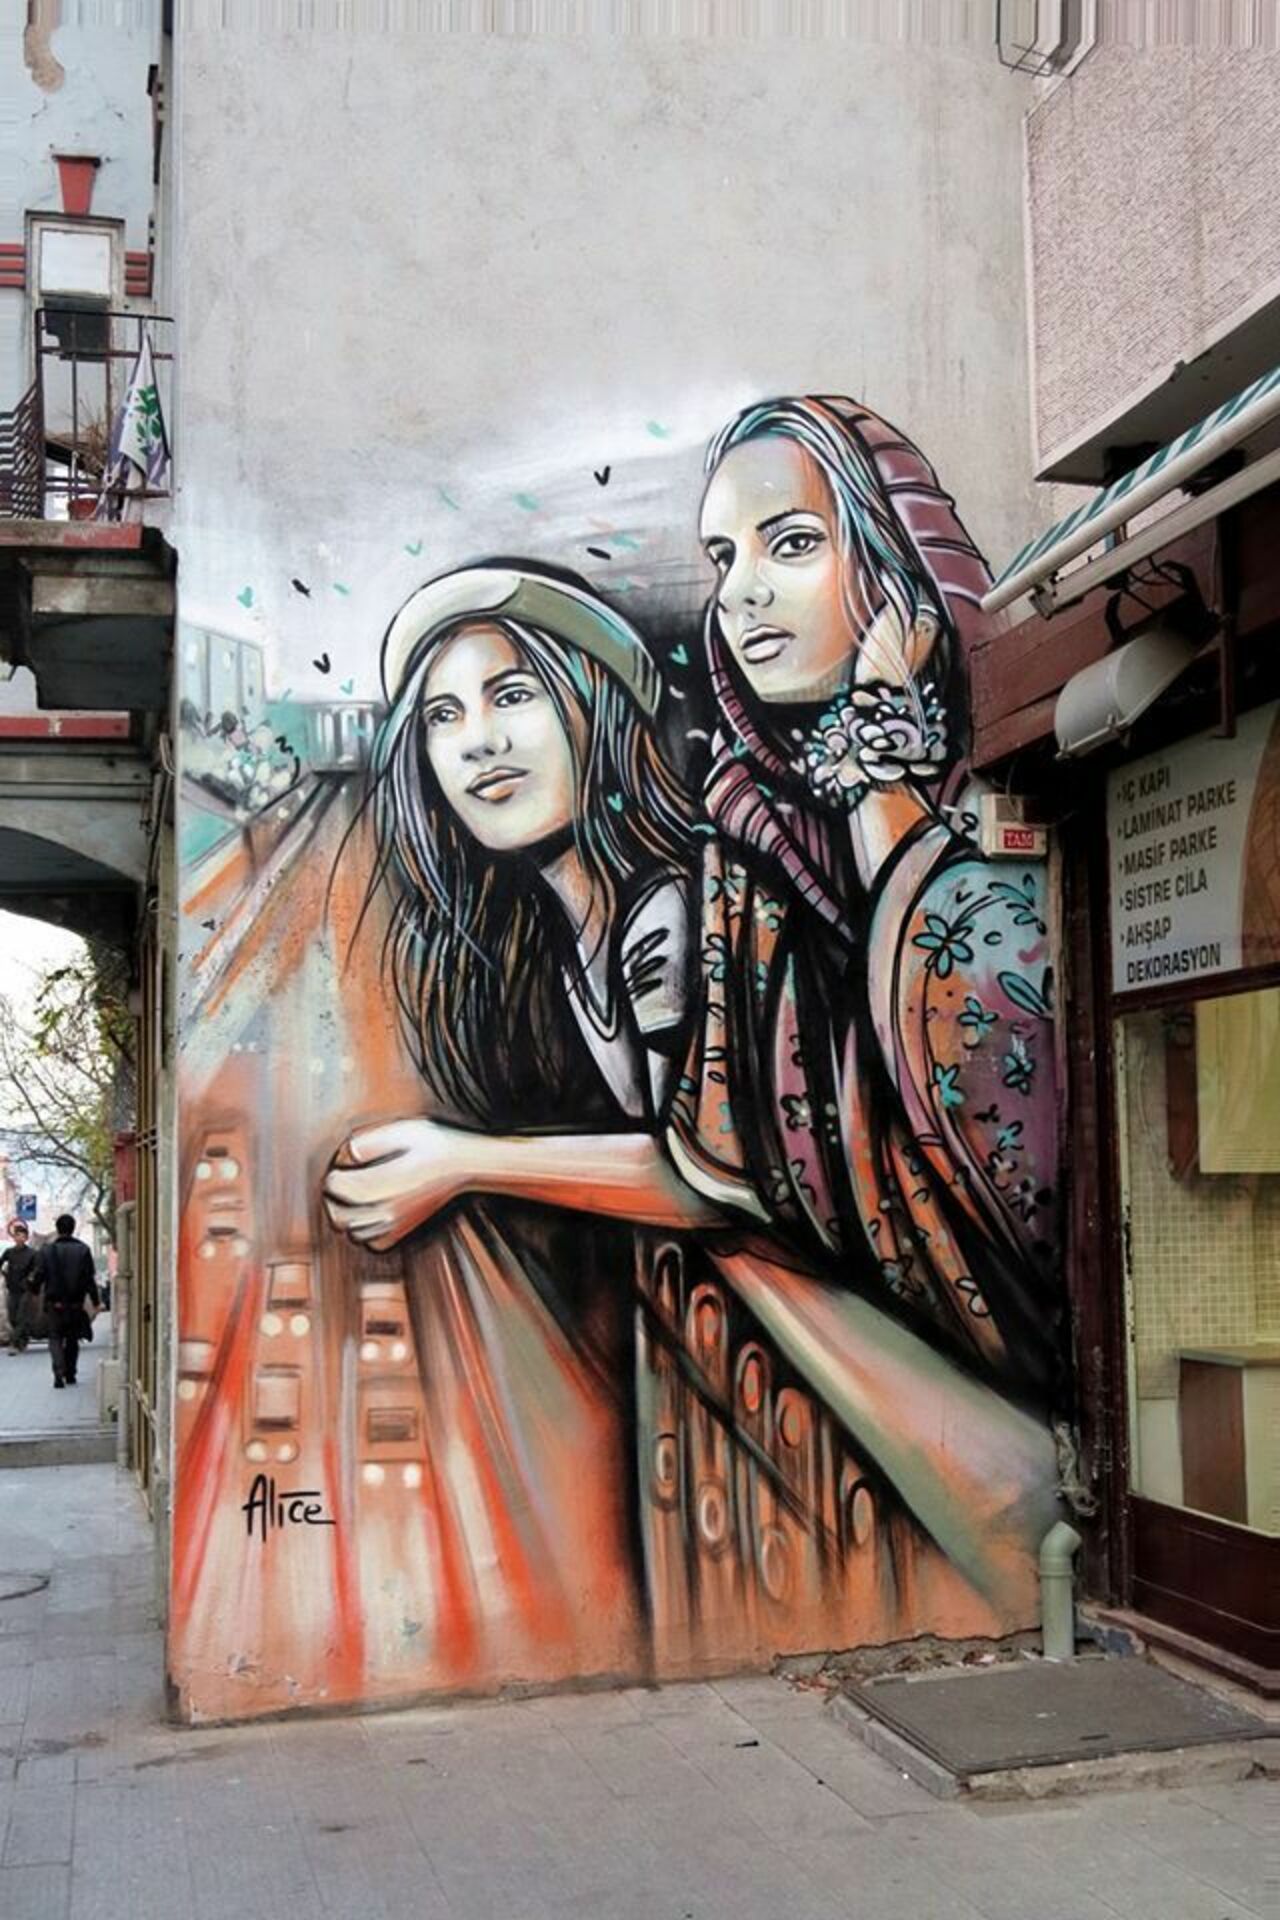 Alice Pasquini - Istanbul - "East and West" #streetart #art #mural #graffiti https://t.co/lC7OKGteSx